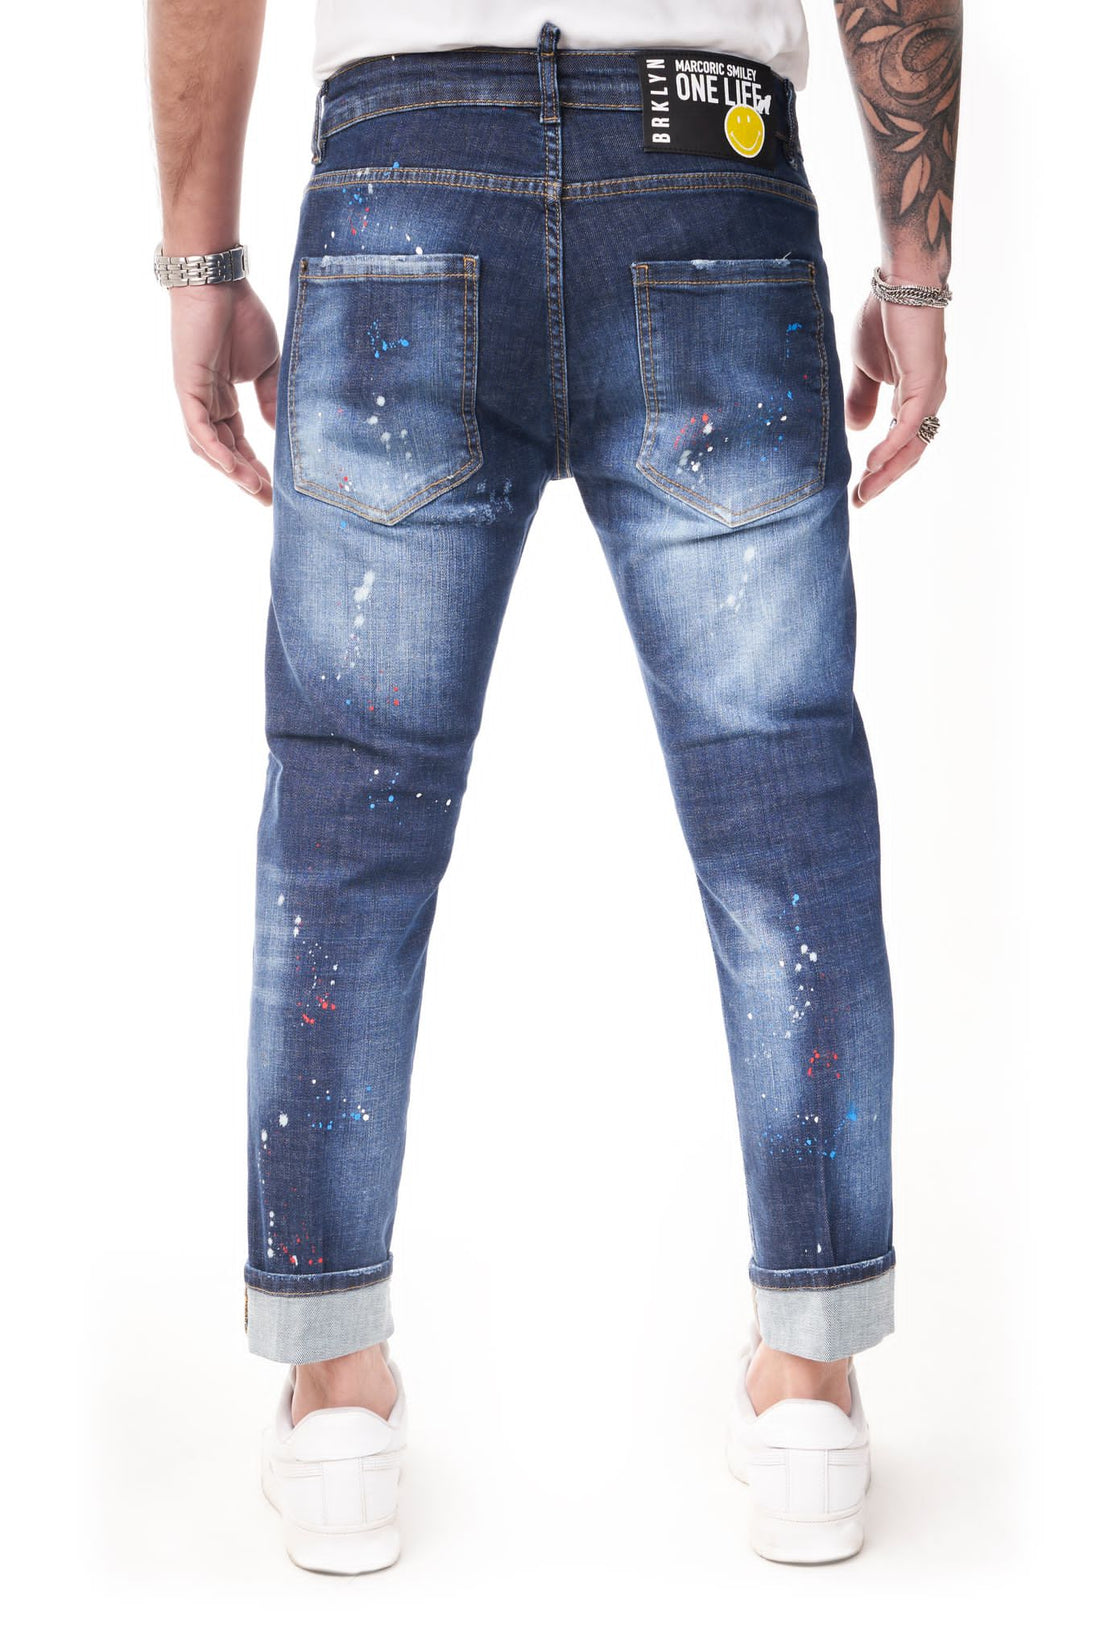 Marcoric jeans